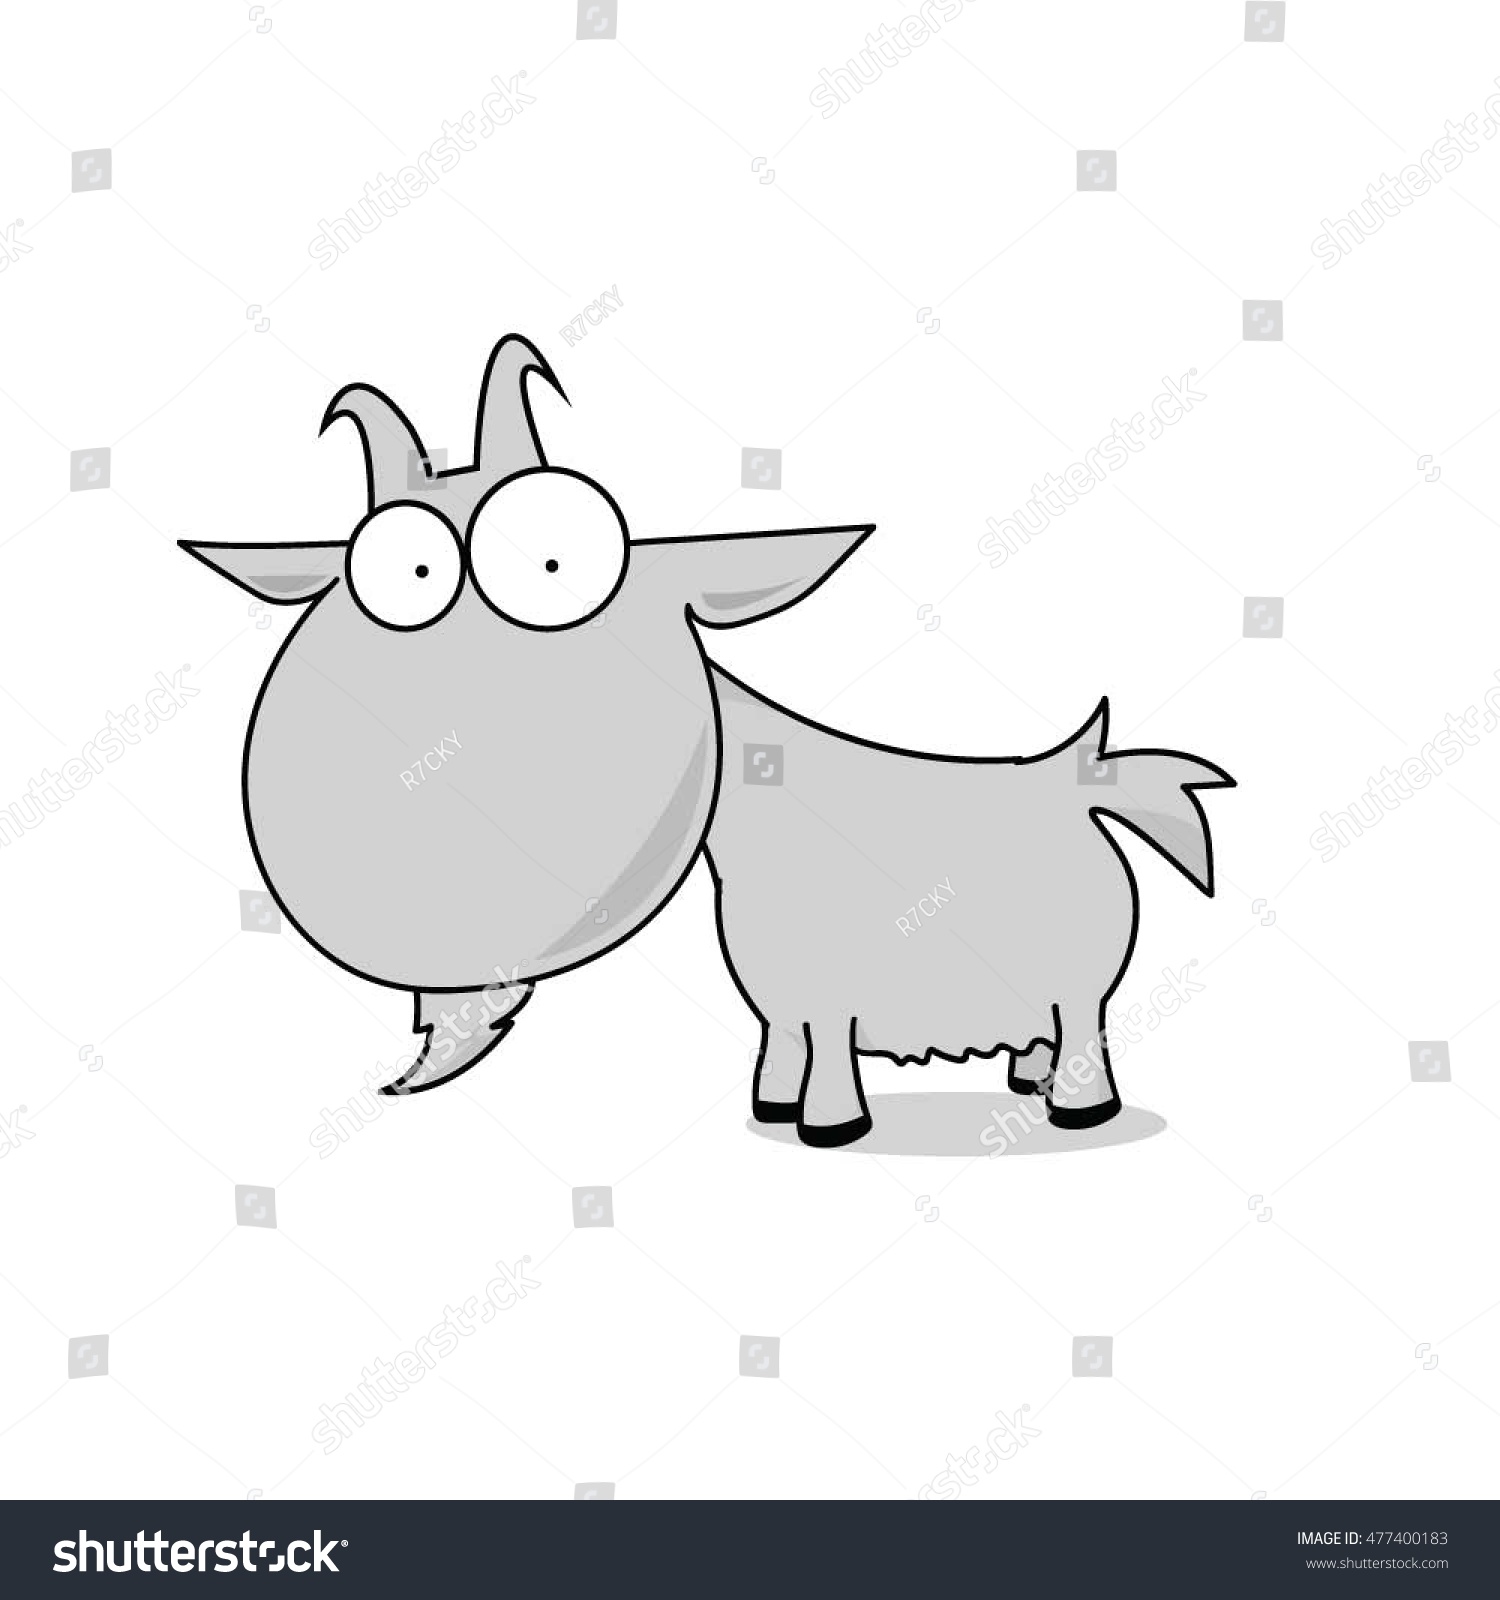 Cartoon Goat Vector Illustration Royalty Free Stock Vector 477400183 